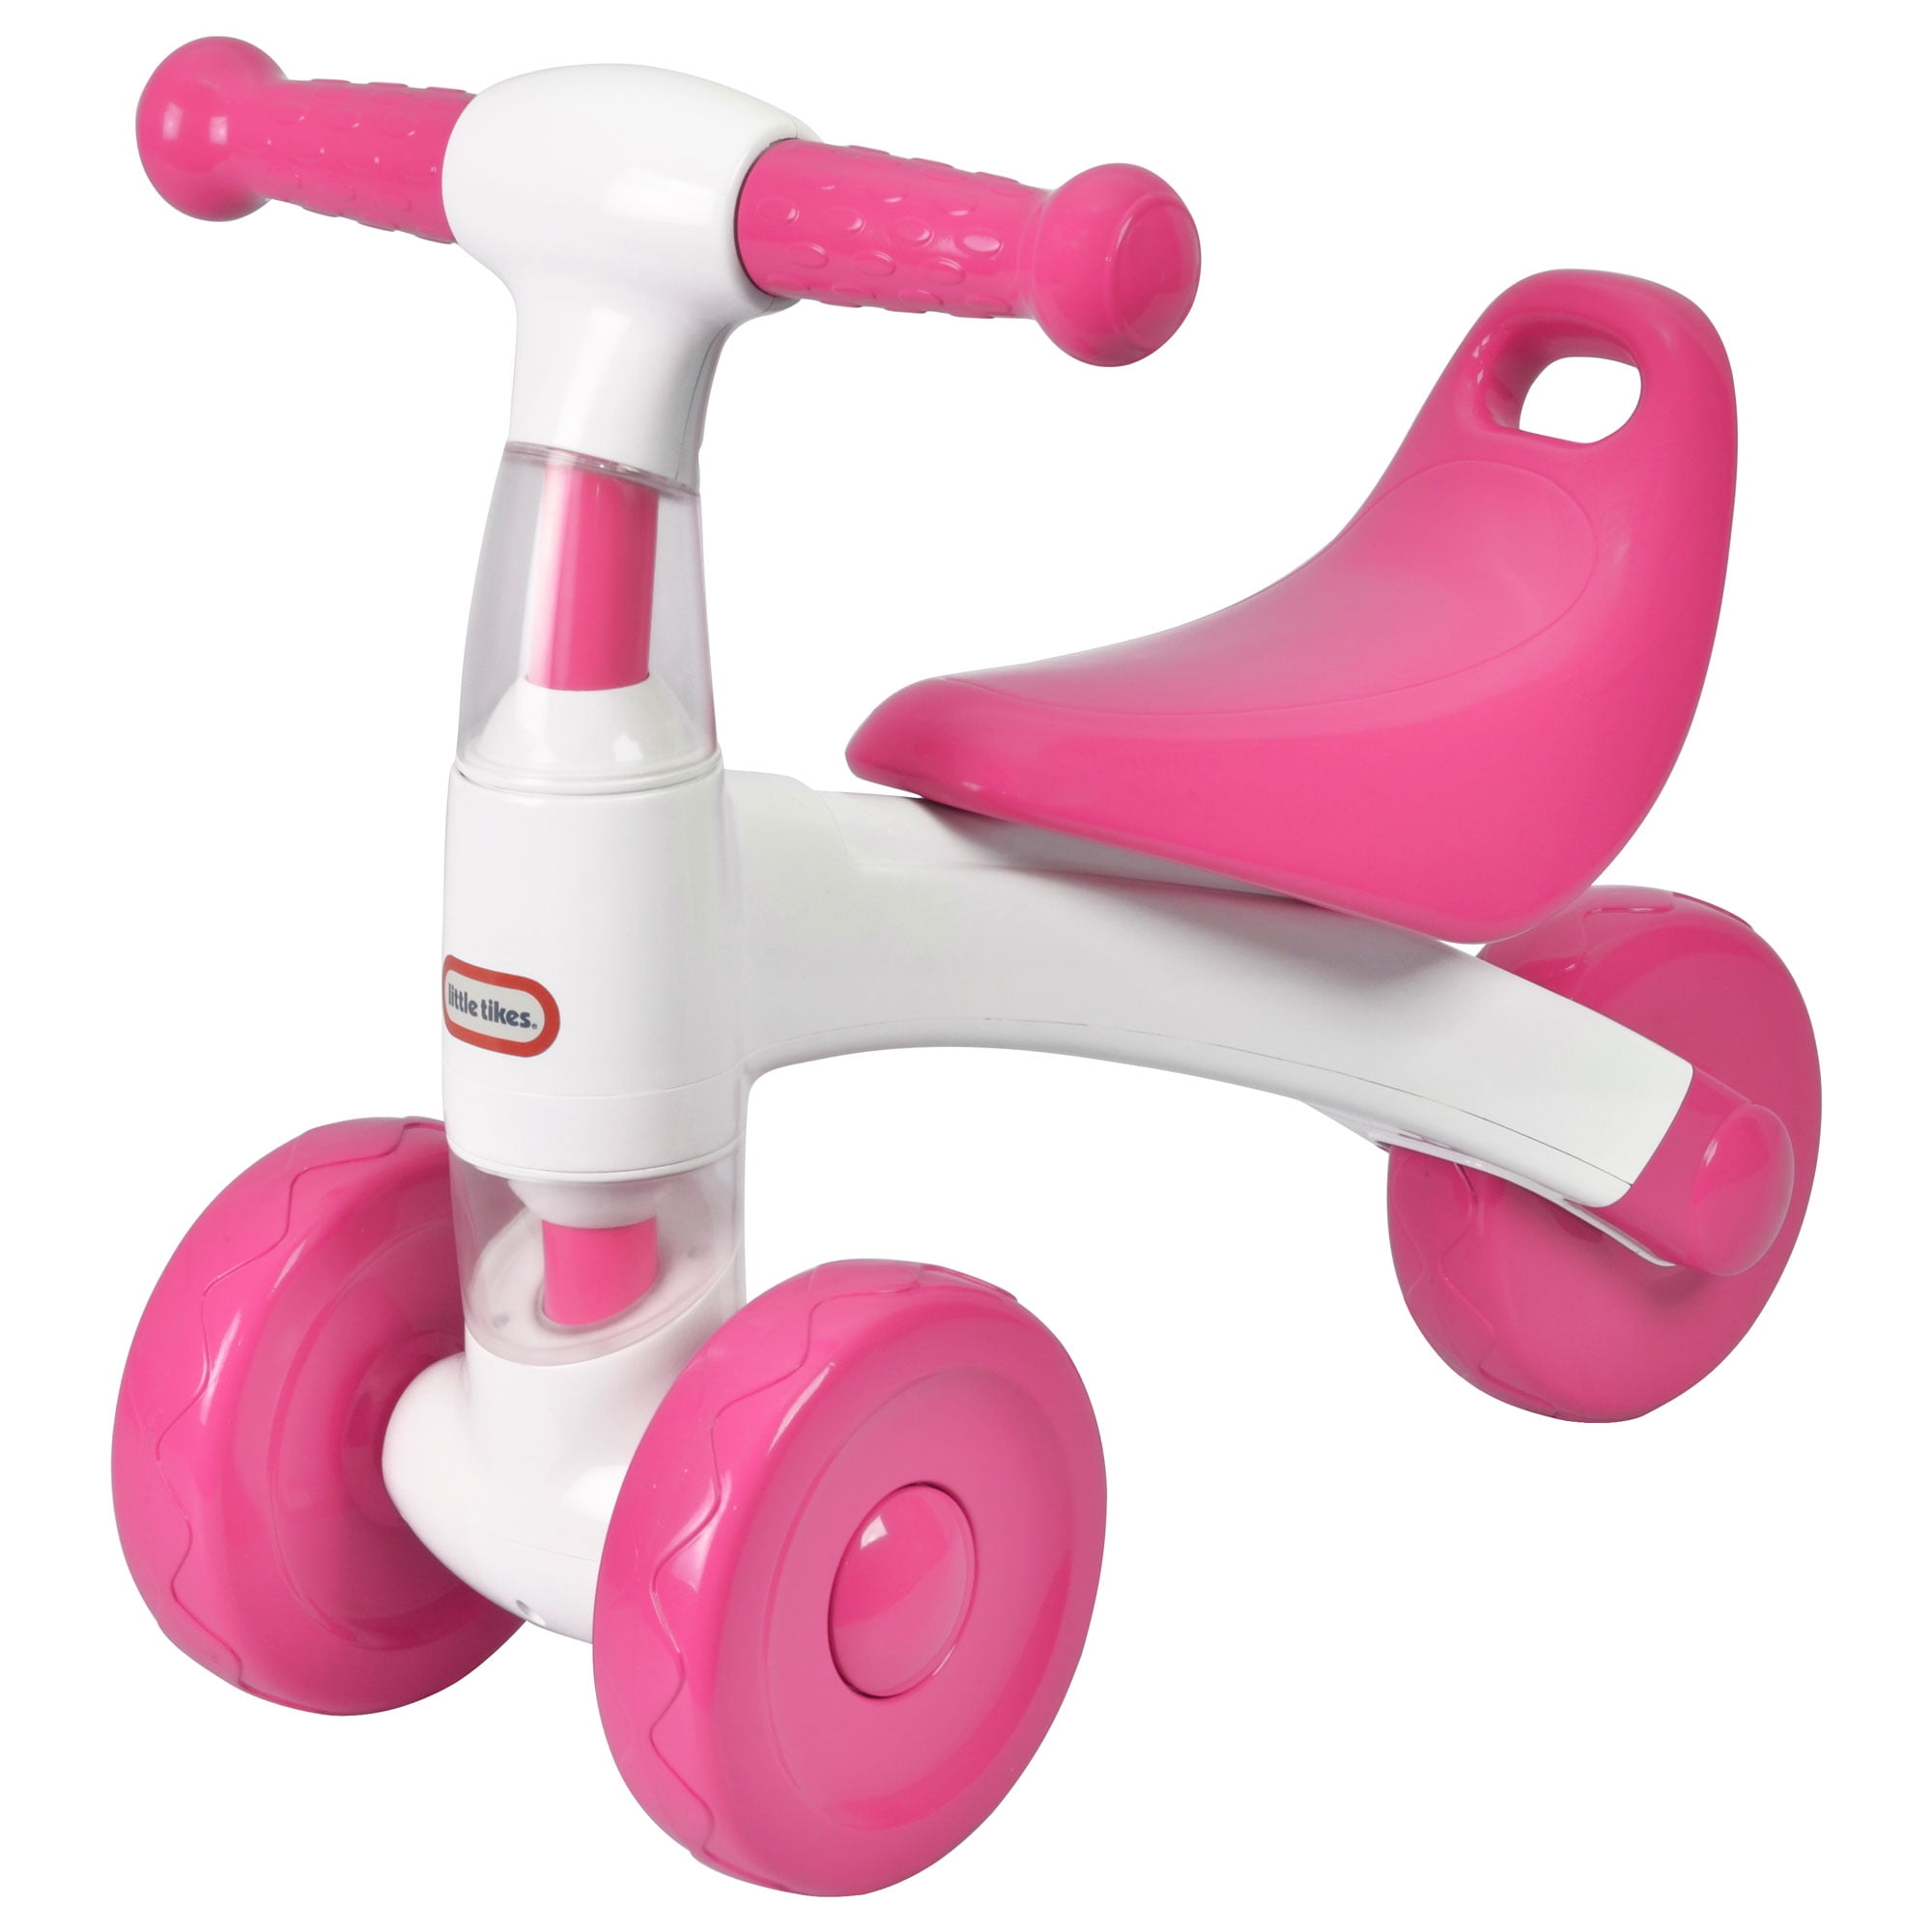 Kinderkraft Freeway Tricycle, Pink, Babies First Bike, Push bike